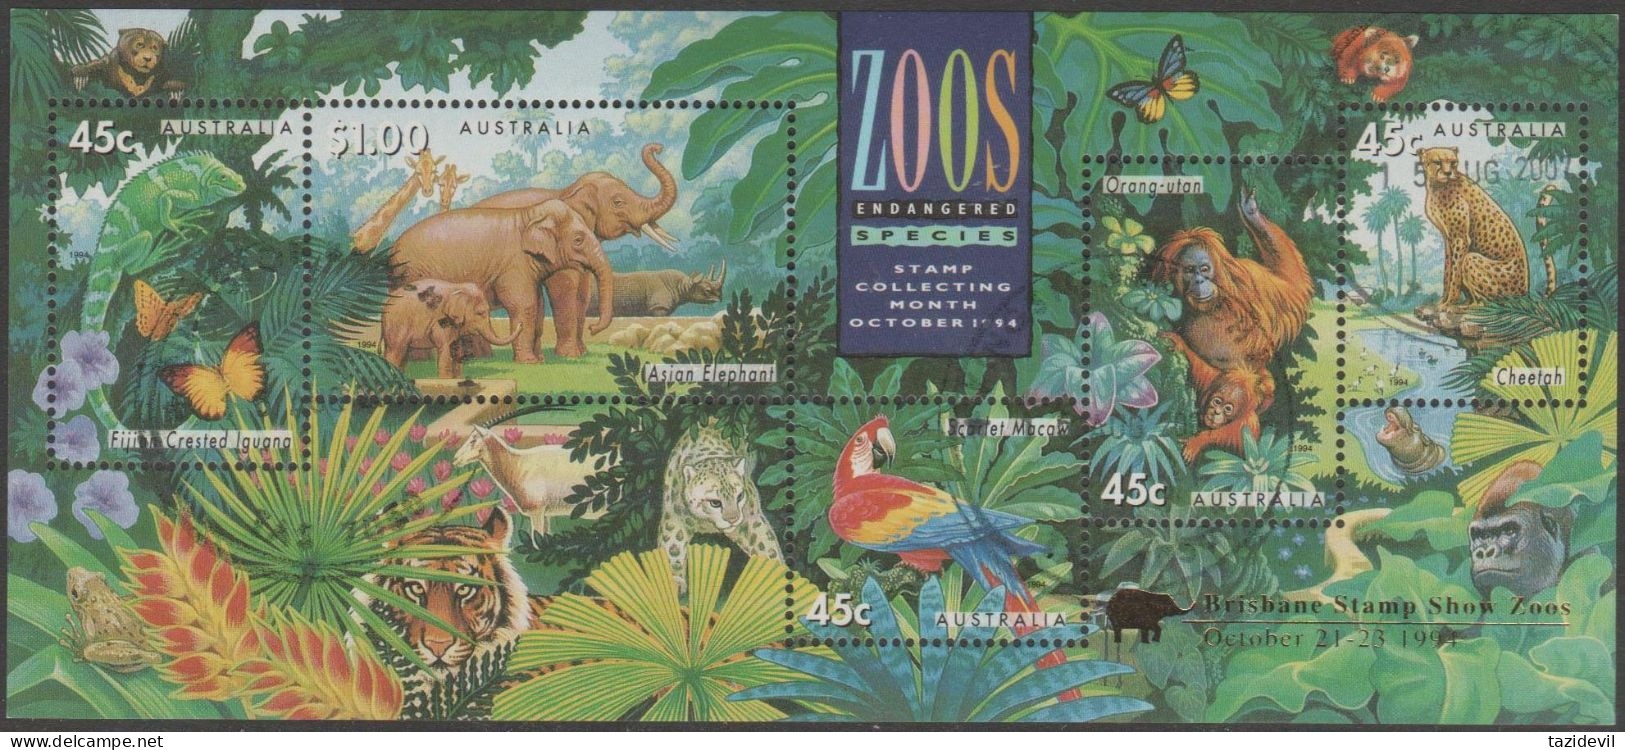 AUSTRALIA - USED - 1994 $2.80 Zoo's Souvenir Sheet Overprinted "Brisbane Stamp Show Zoos" - Gebruikt